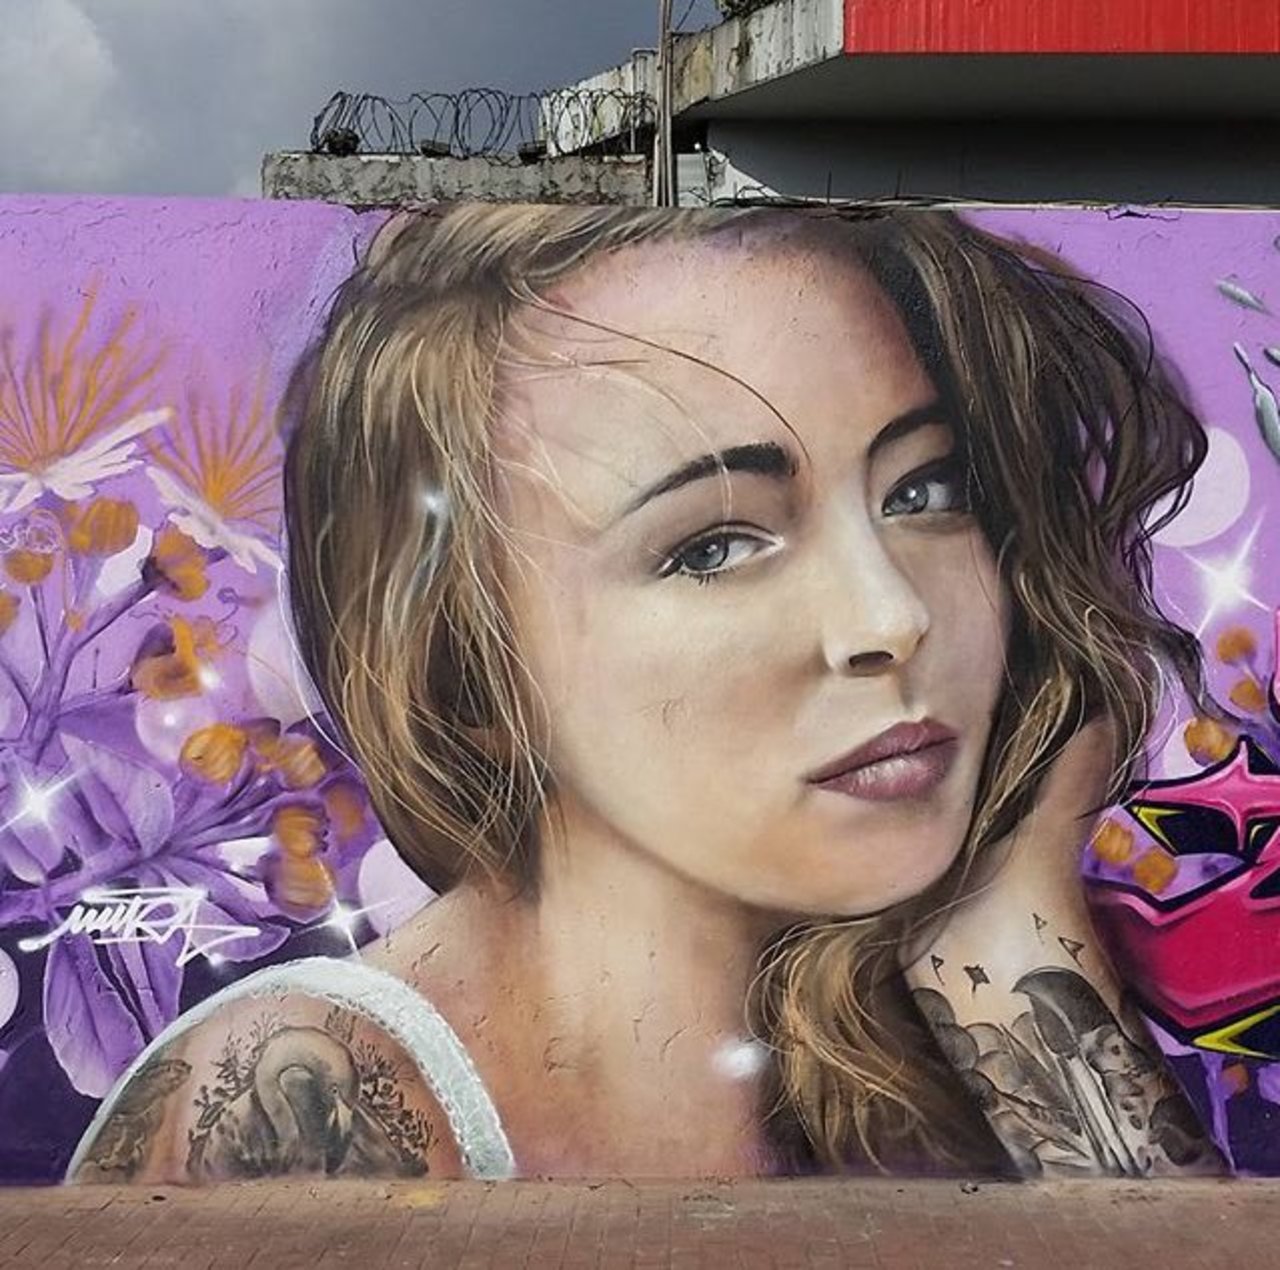 RT belilac "RT belilac "RT belilac "RT belilac "New Street Art by Mantarea 

#art #graffiti #mural #streetart https://t.co/U038PzVuGN""""